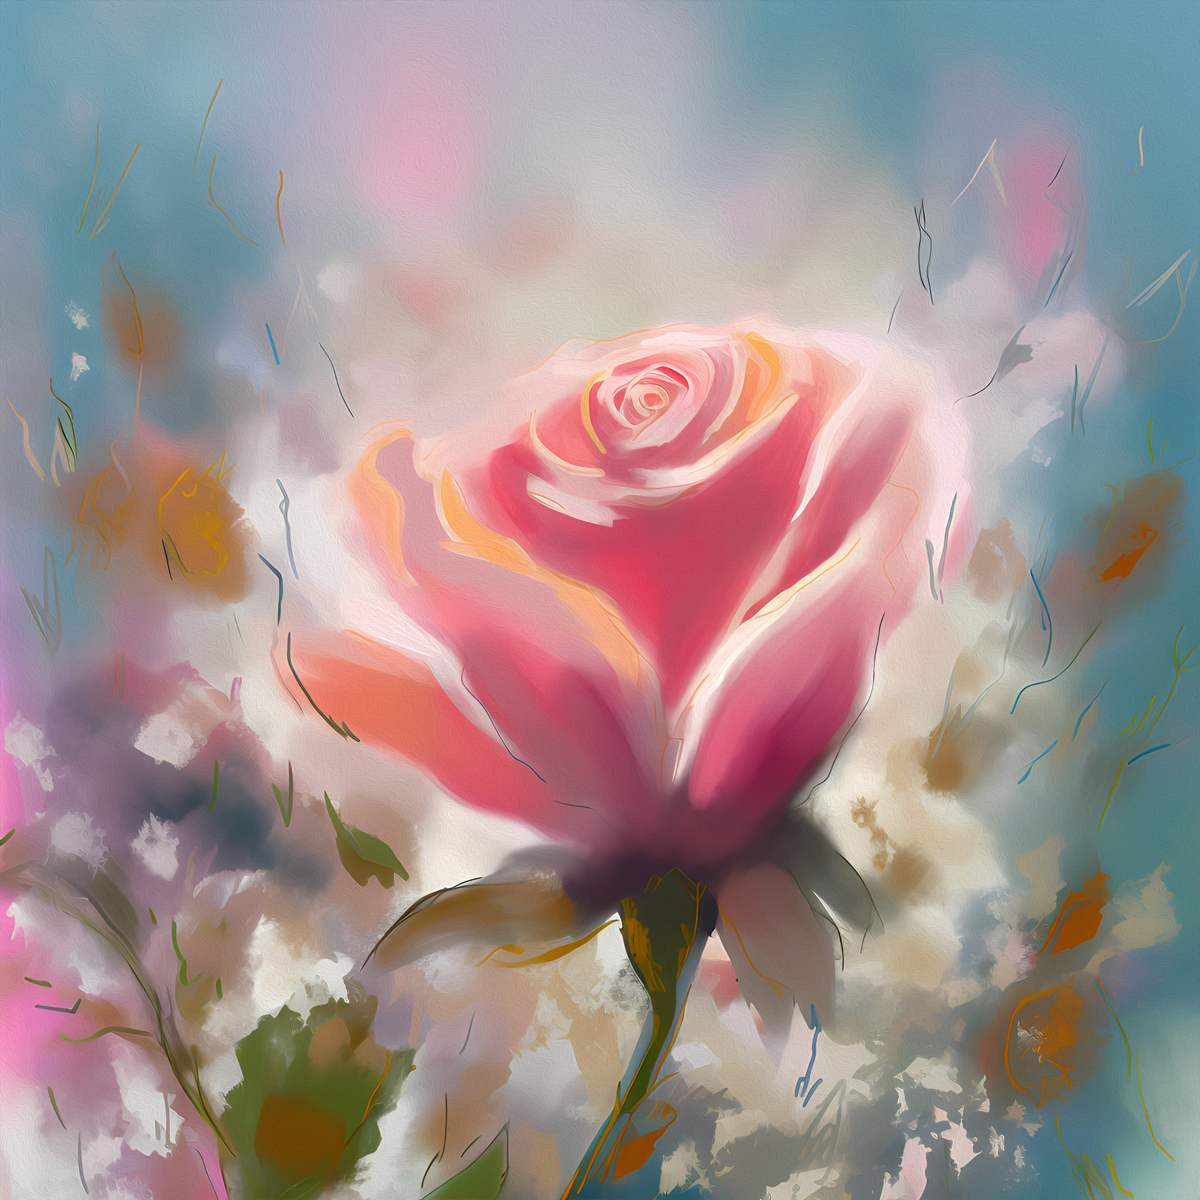  Radiant Bloom: 'Rose In The Sun' Artwork - Art Print on Canvas. Artemyst